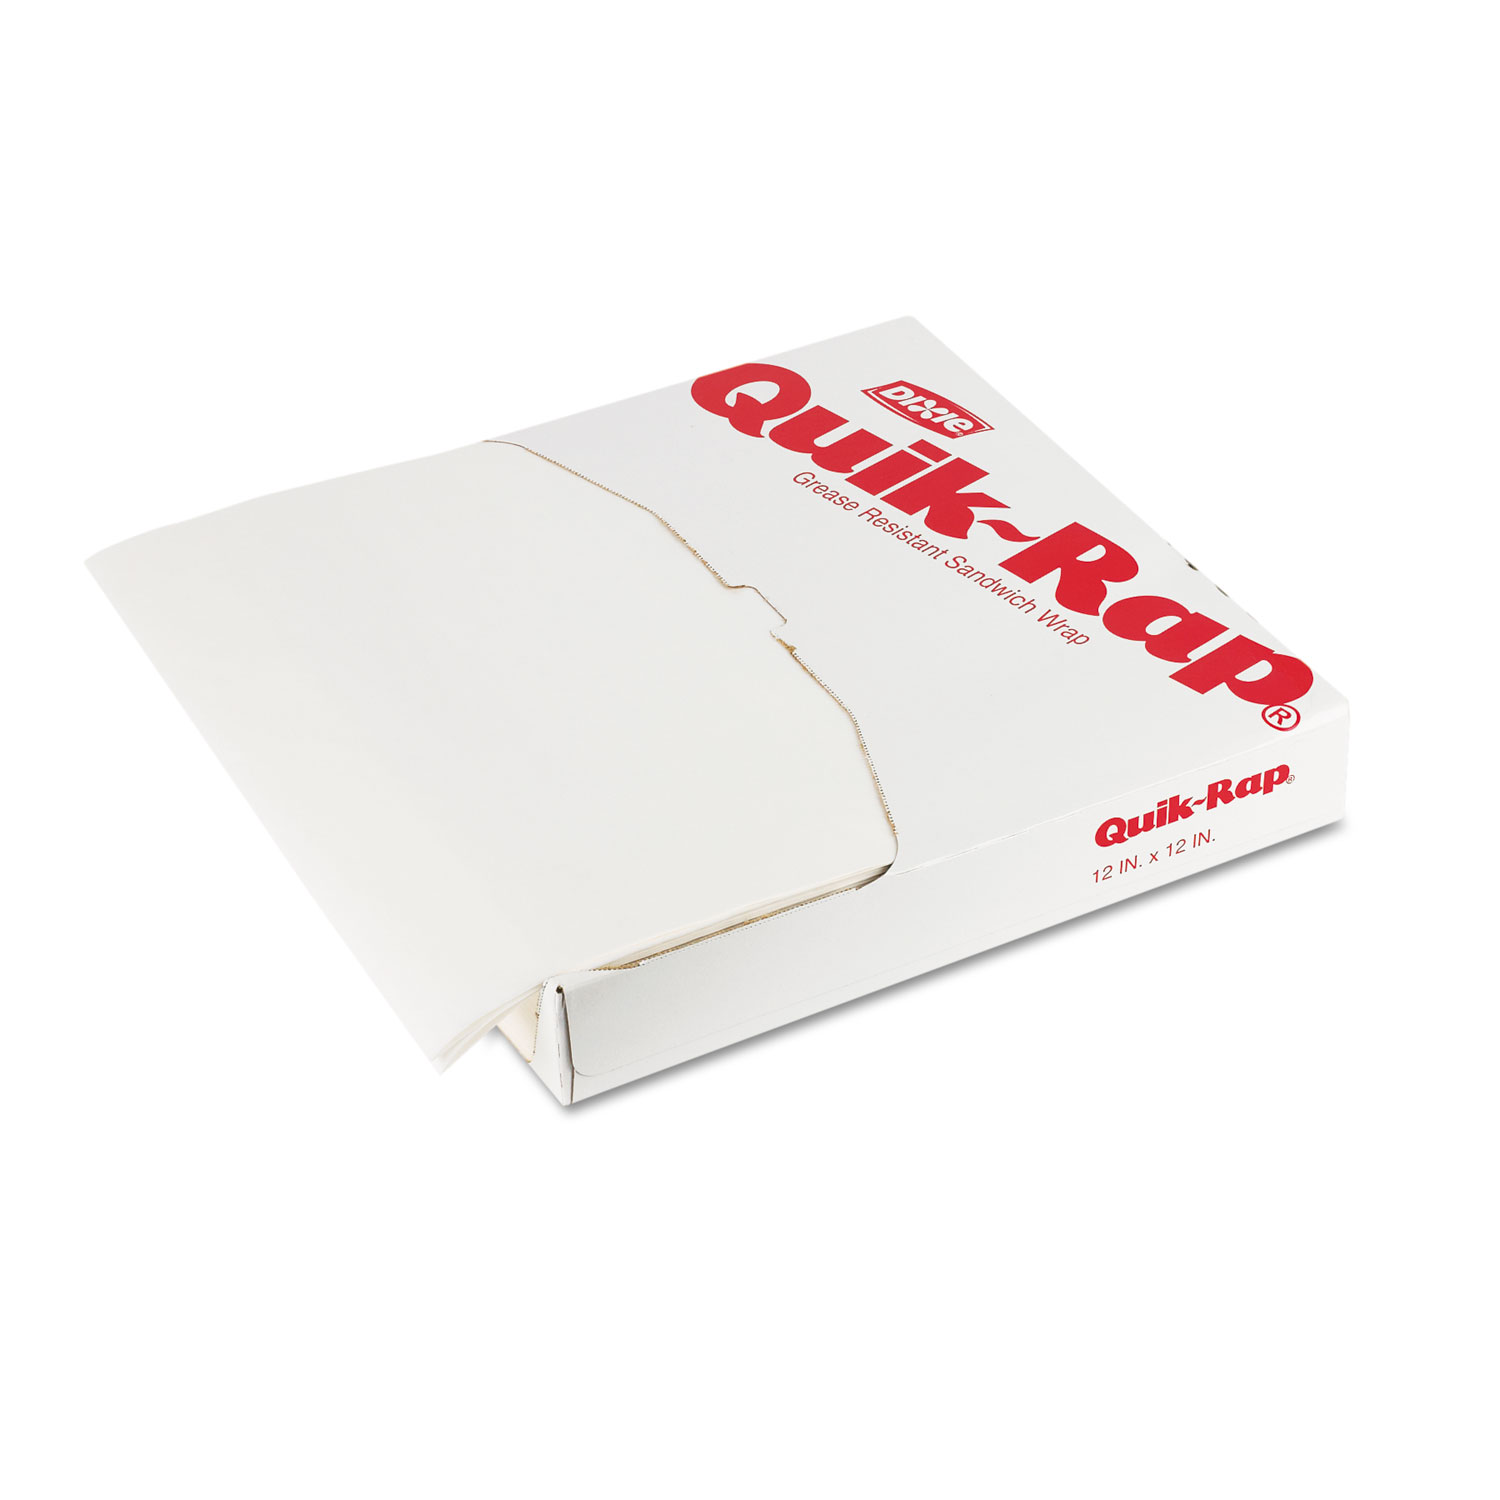 Quik-Rap Grease-Resistant Waxed Sandwich Paper, 15x16 OpaqueWhite 1000/PK 3PK/CT